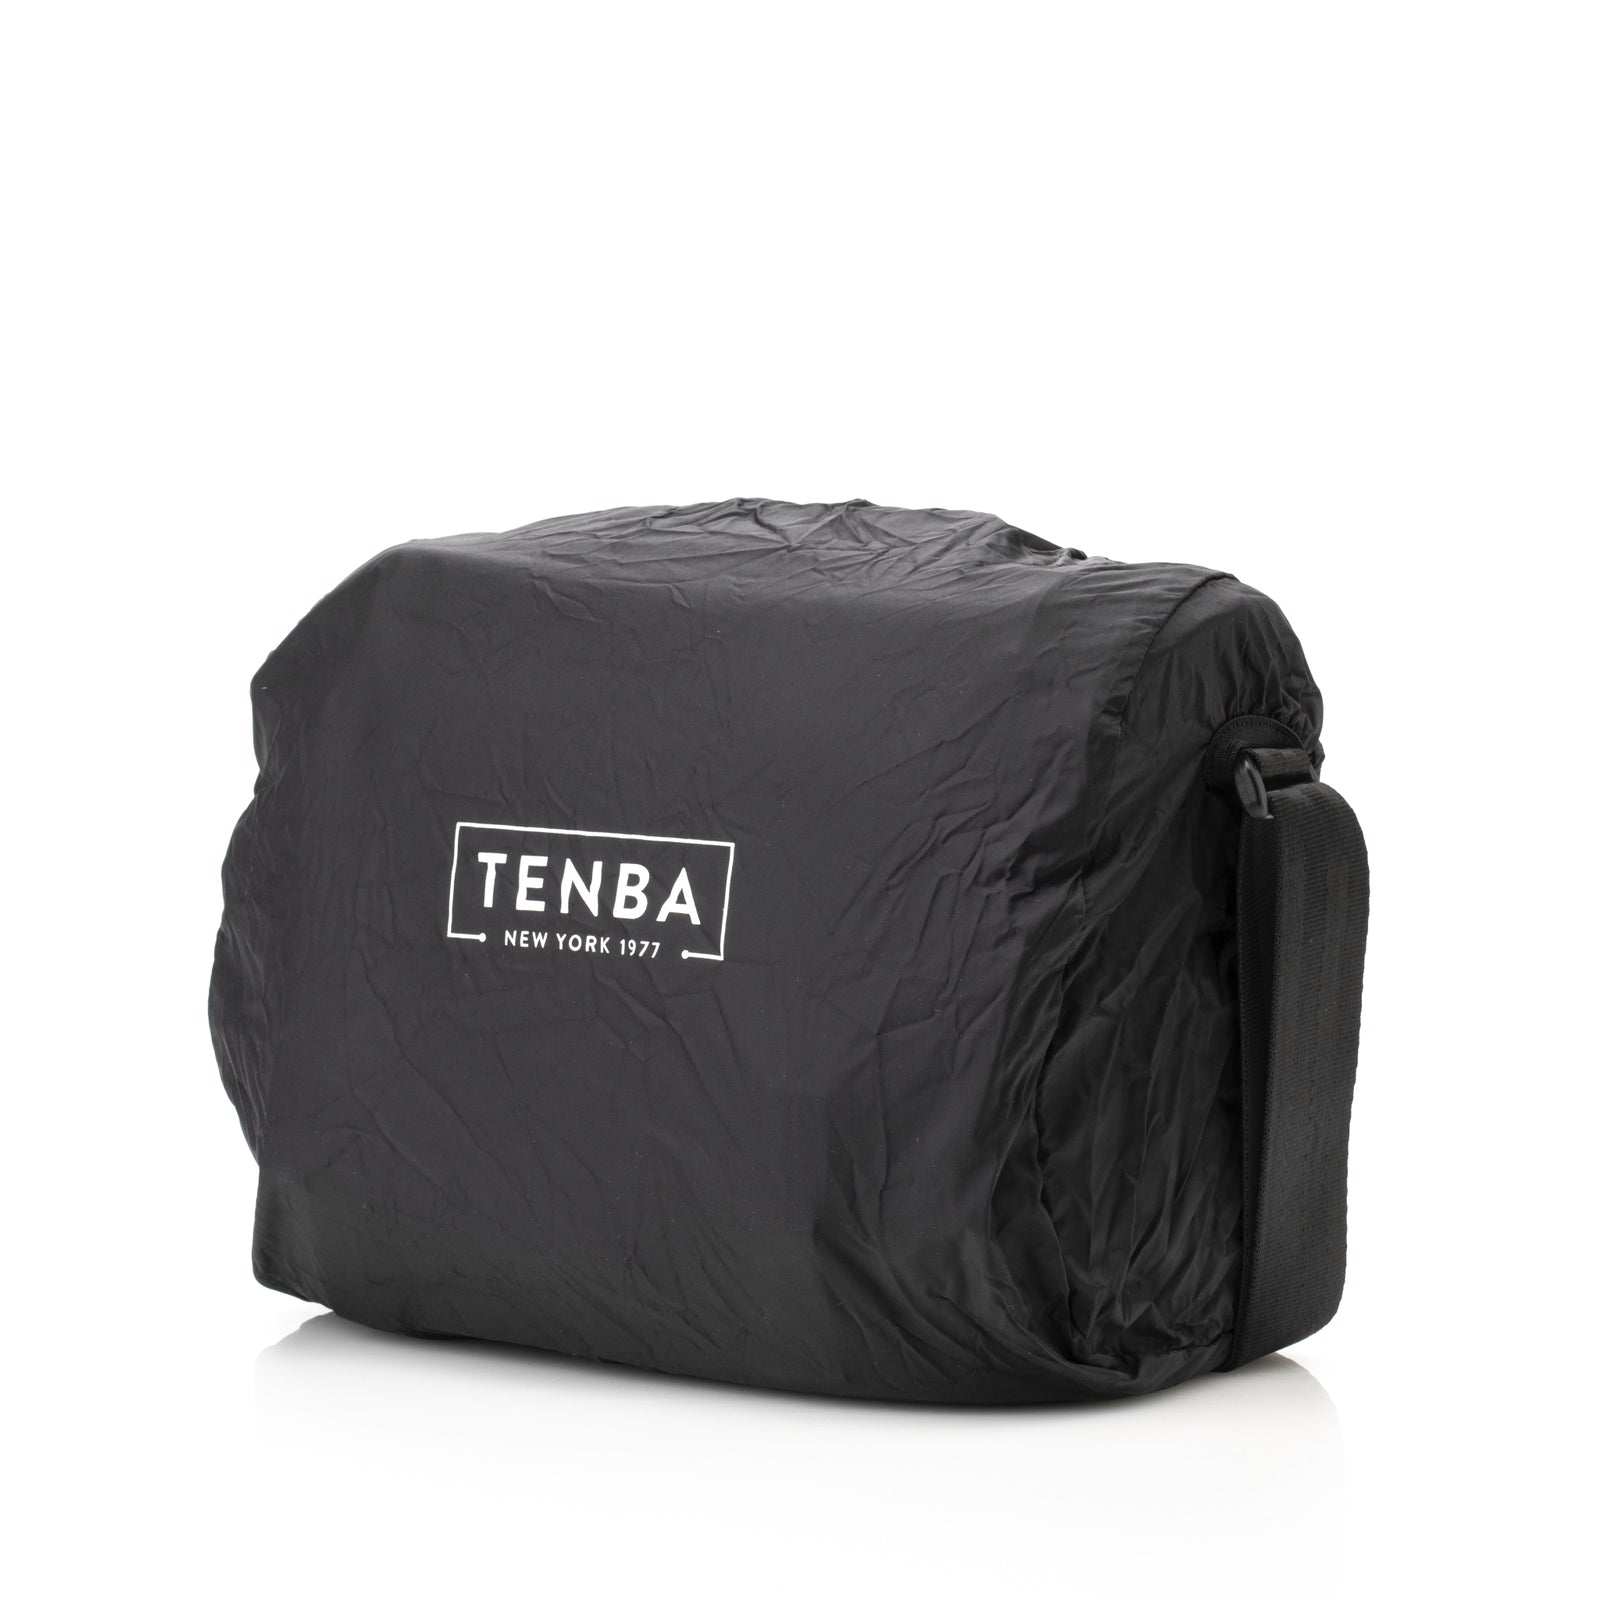 Tenba DNA 16 DSLR Messenger Bag - Black